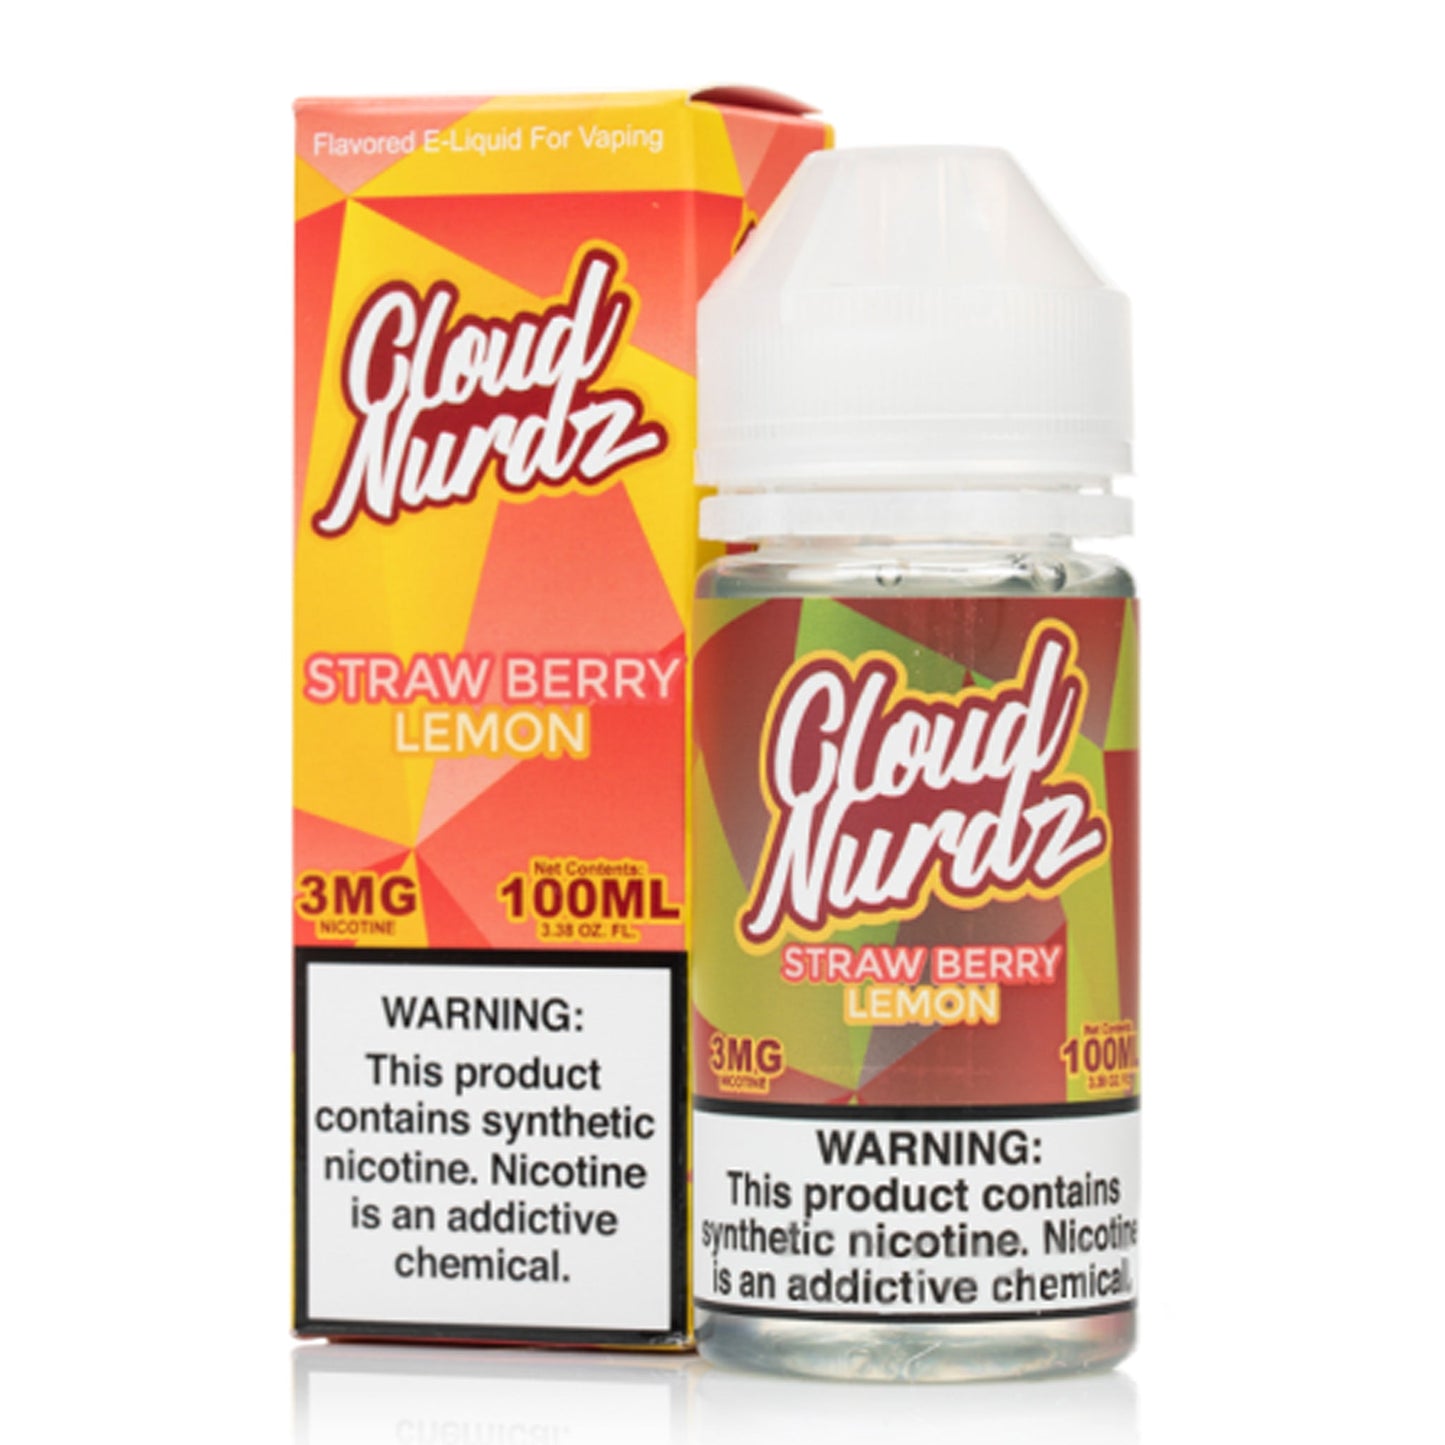 Cloud Nurdz 100ML - Straw Berry Lemon - Mobs Enterprise